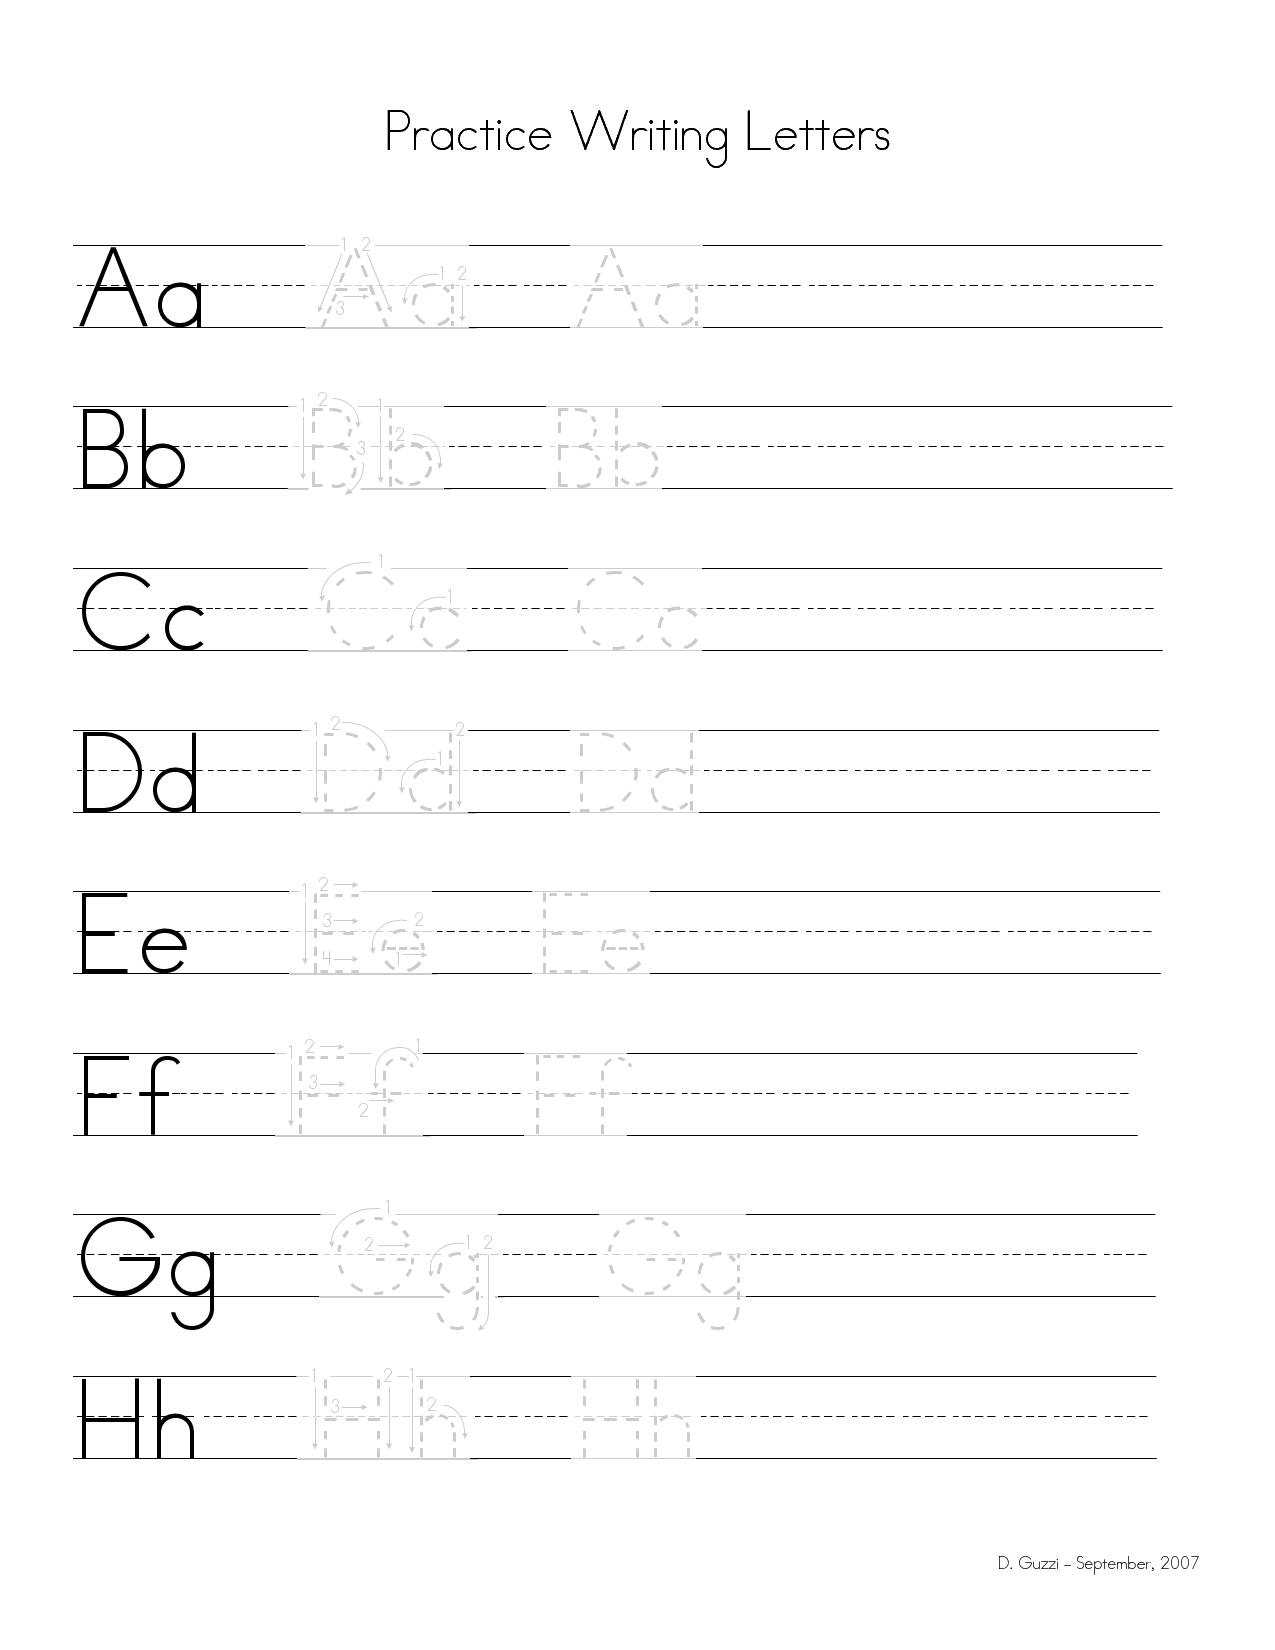 Letter-Writing Alphabet Practice Image